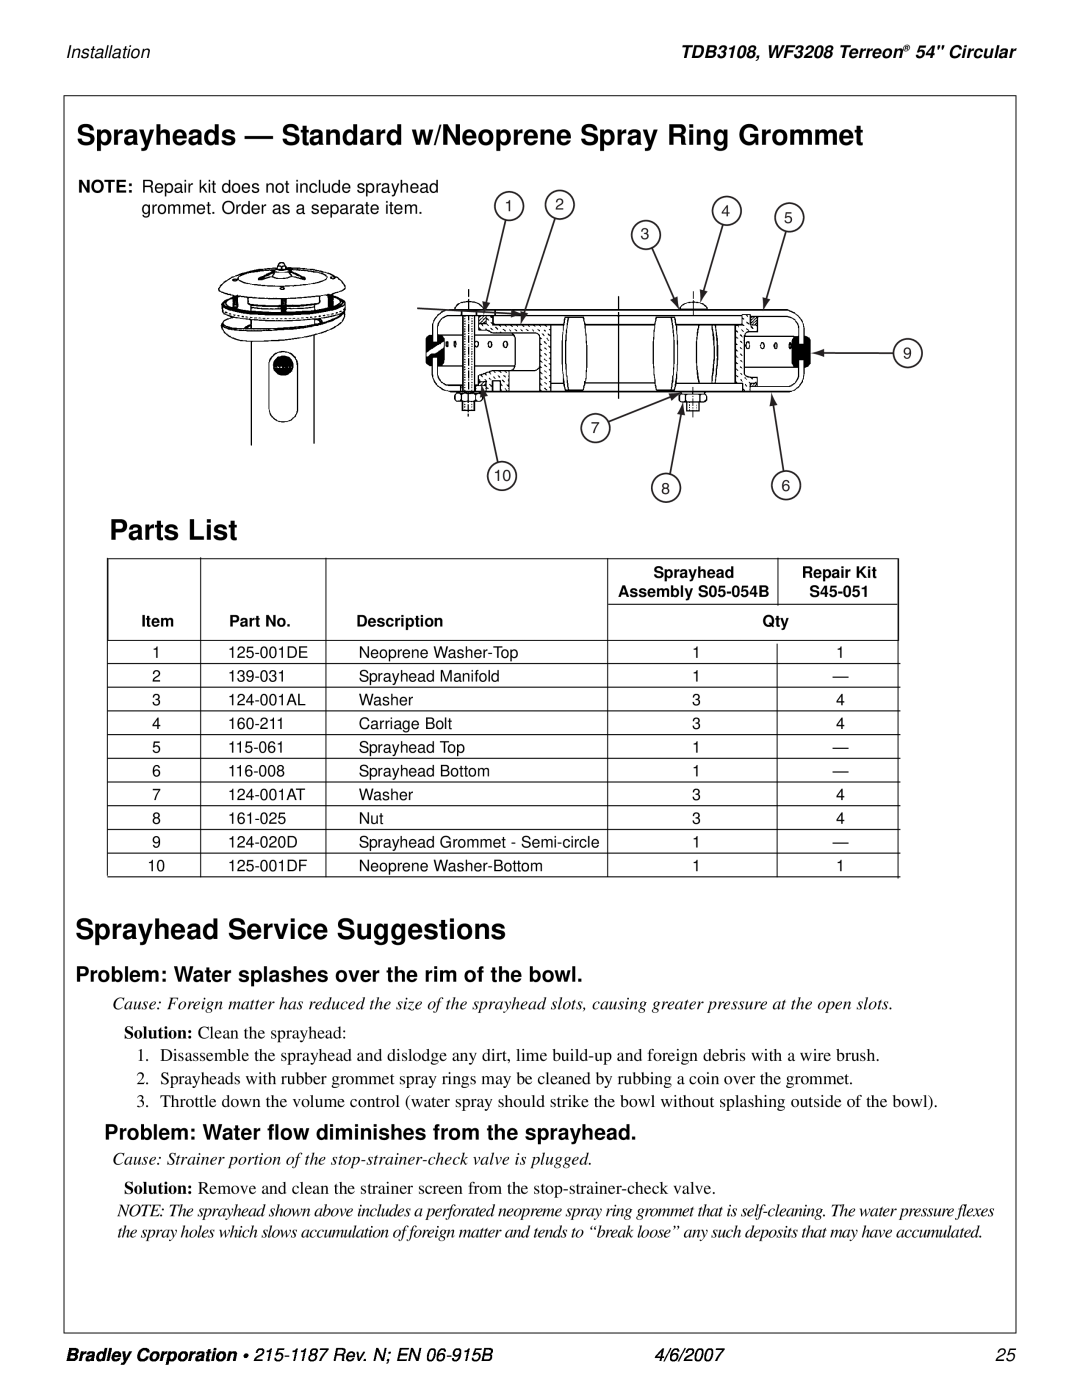 Bradley Smoker TDB3108 Sprayheads - Standard w/Neoprene Spray Ring Grommet, Parts List, Sprayhead Service Suggestions 